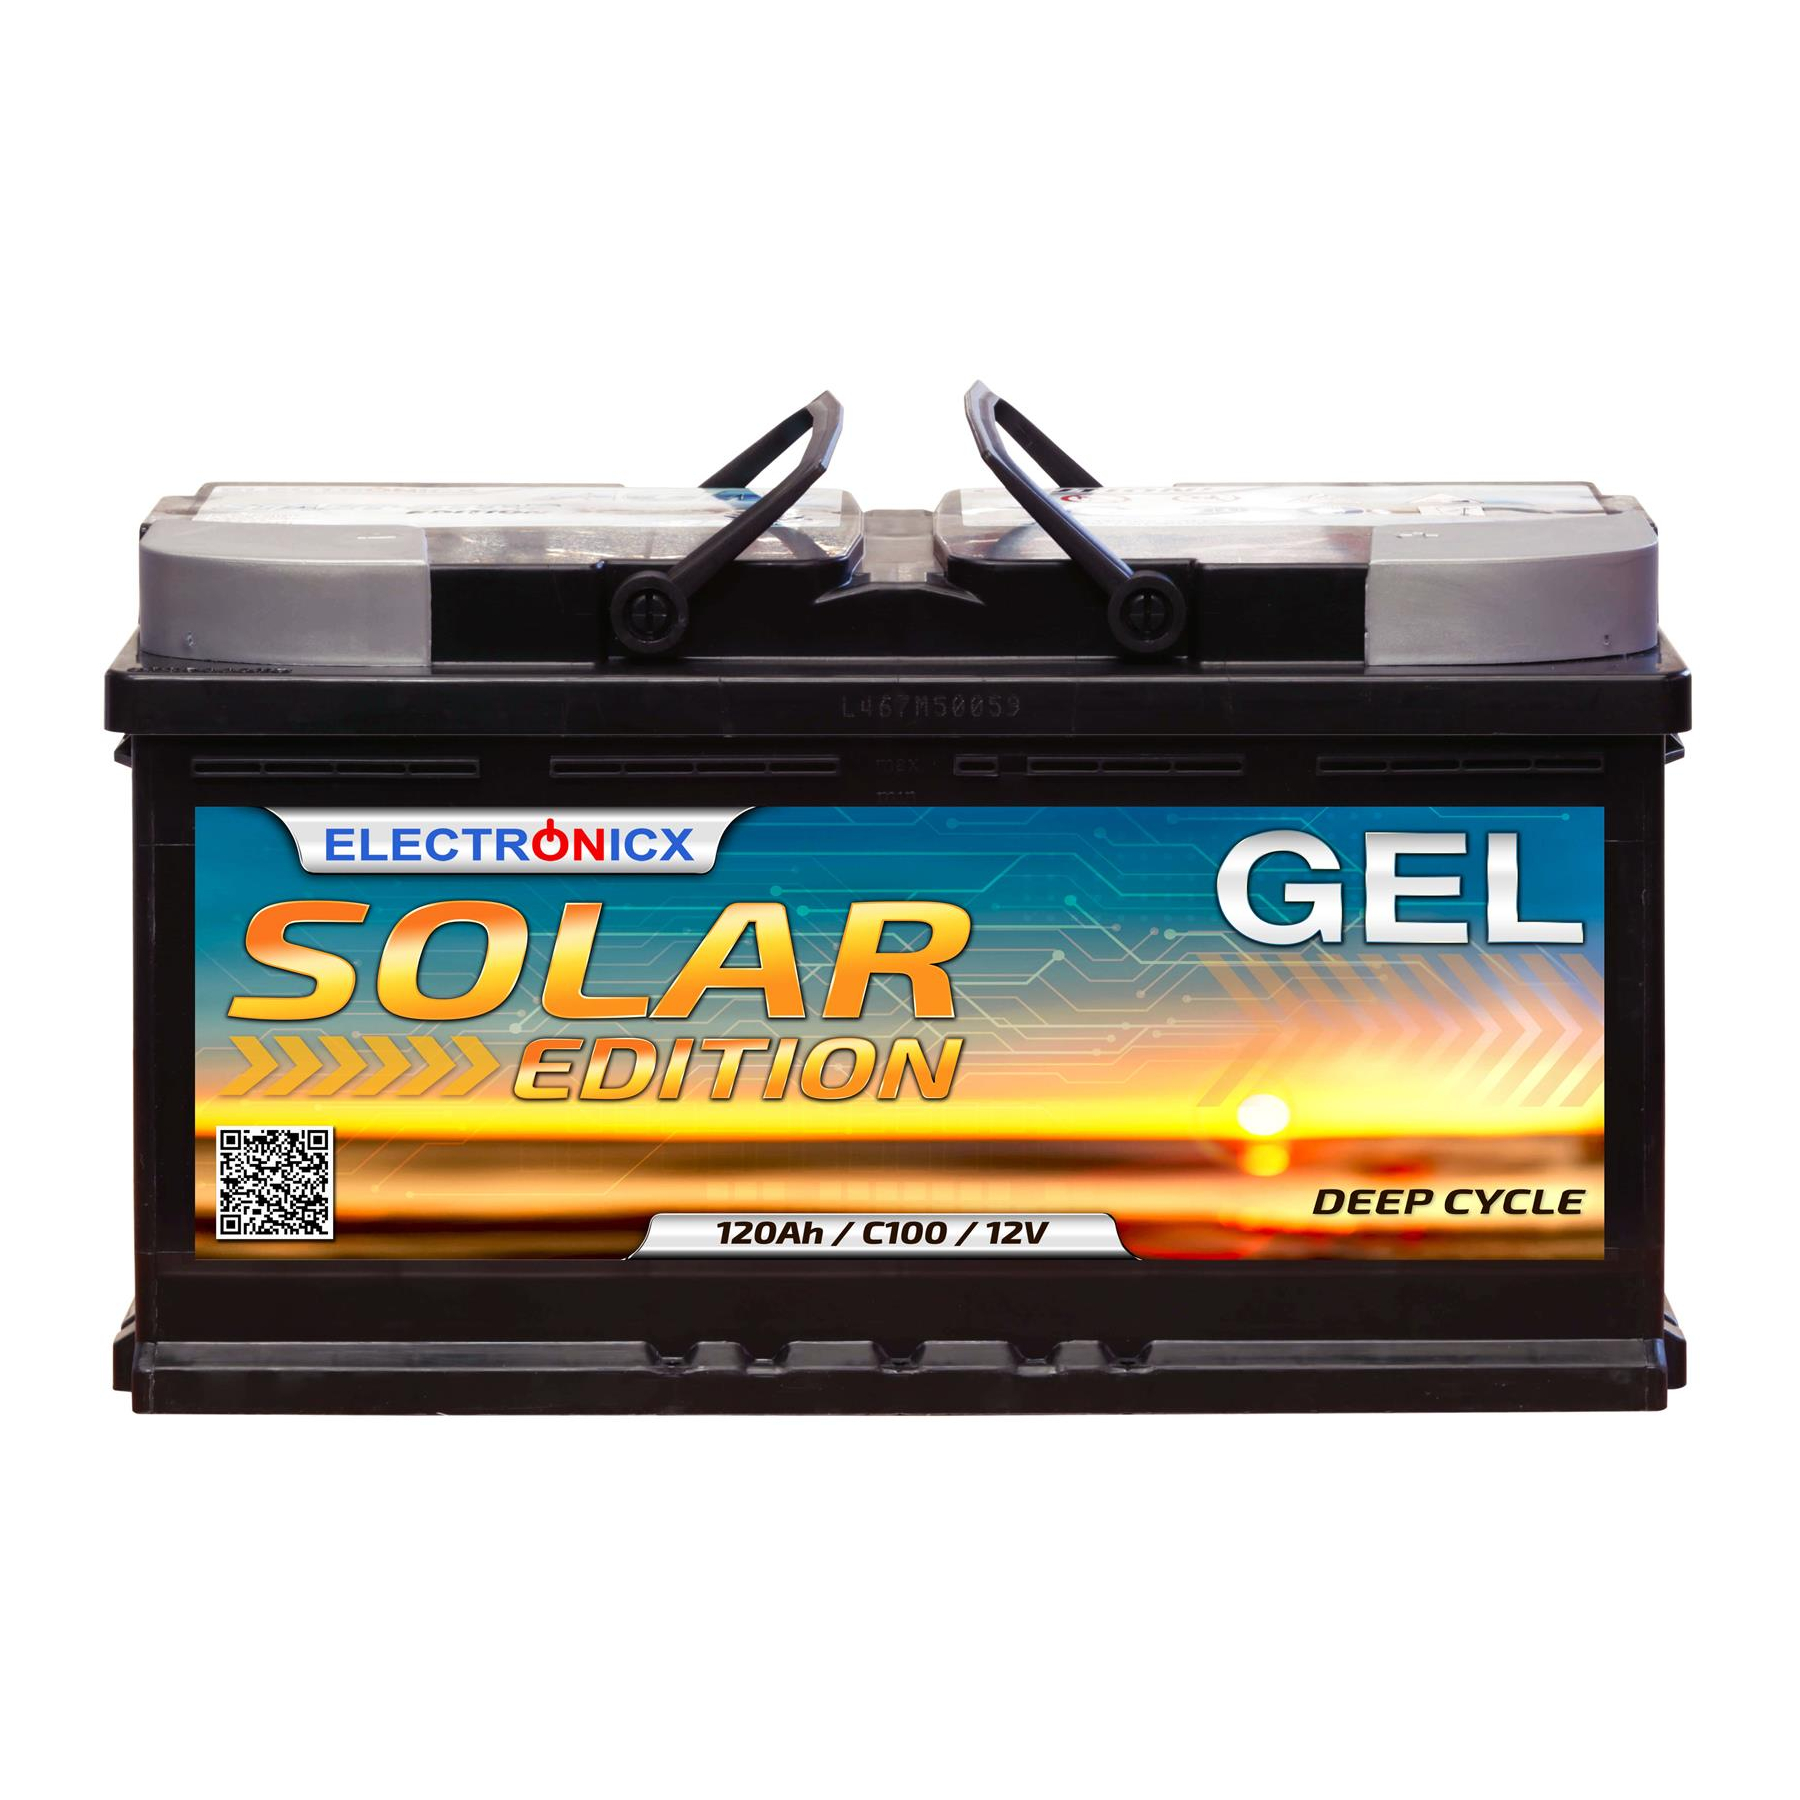 Solar, Batterie € 169,99 120 AH Electronicx 12V Solar Gel Edition